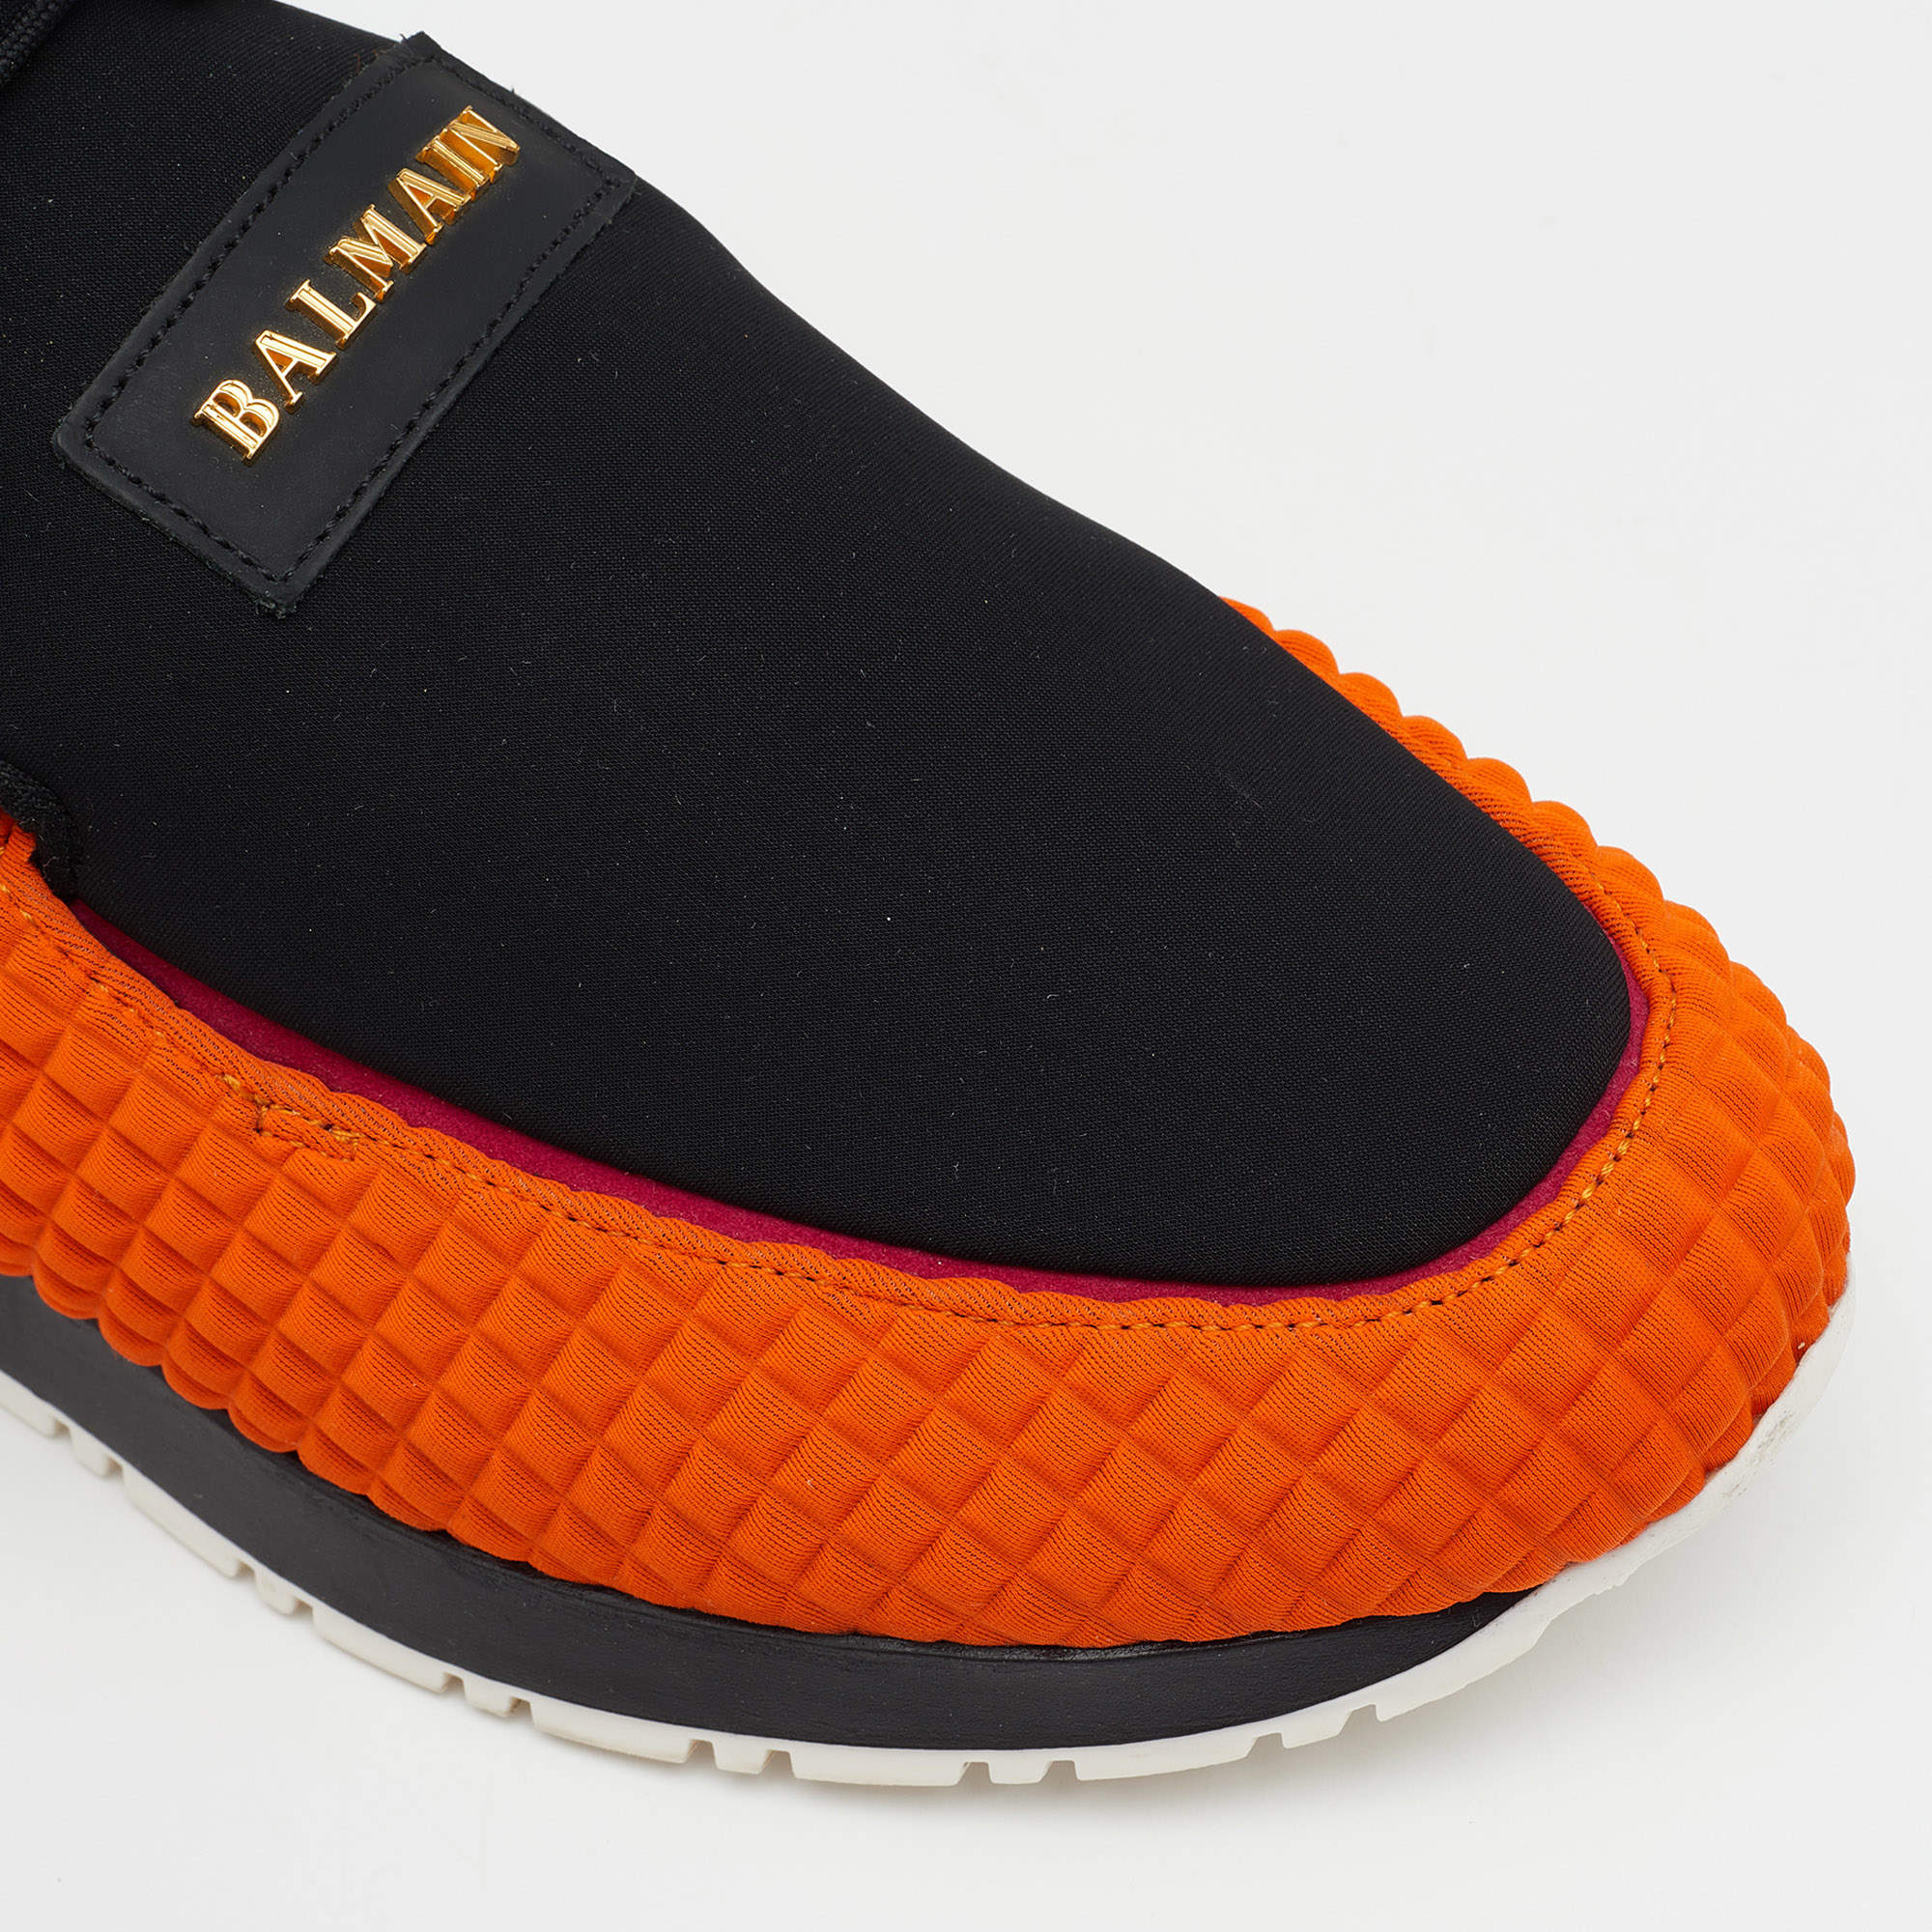 Watchful Gud biograf Balmain Black/Orange Quilted Neoprene and Leather Low Top Sneakers Size 37  Balmain | TLC